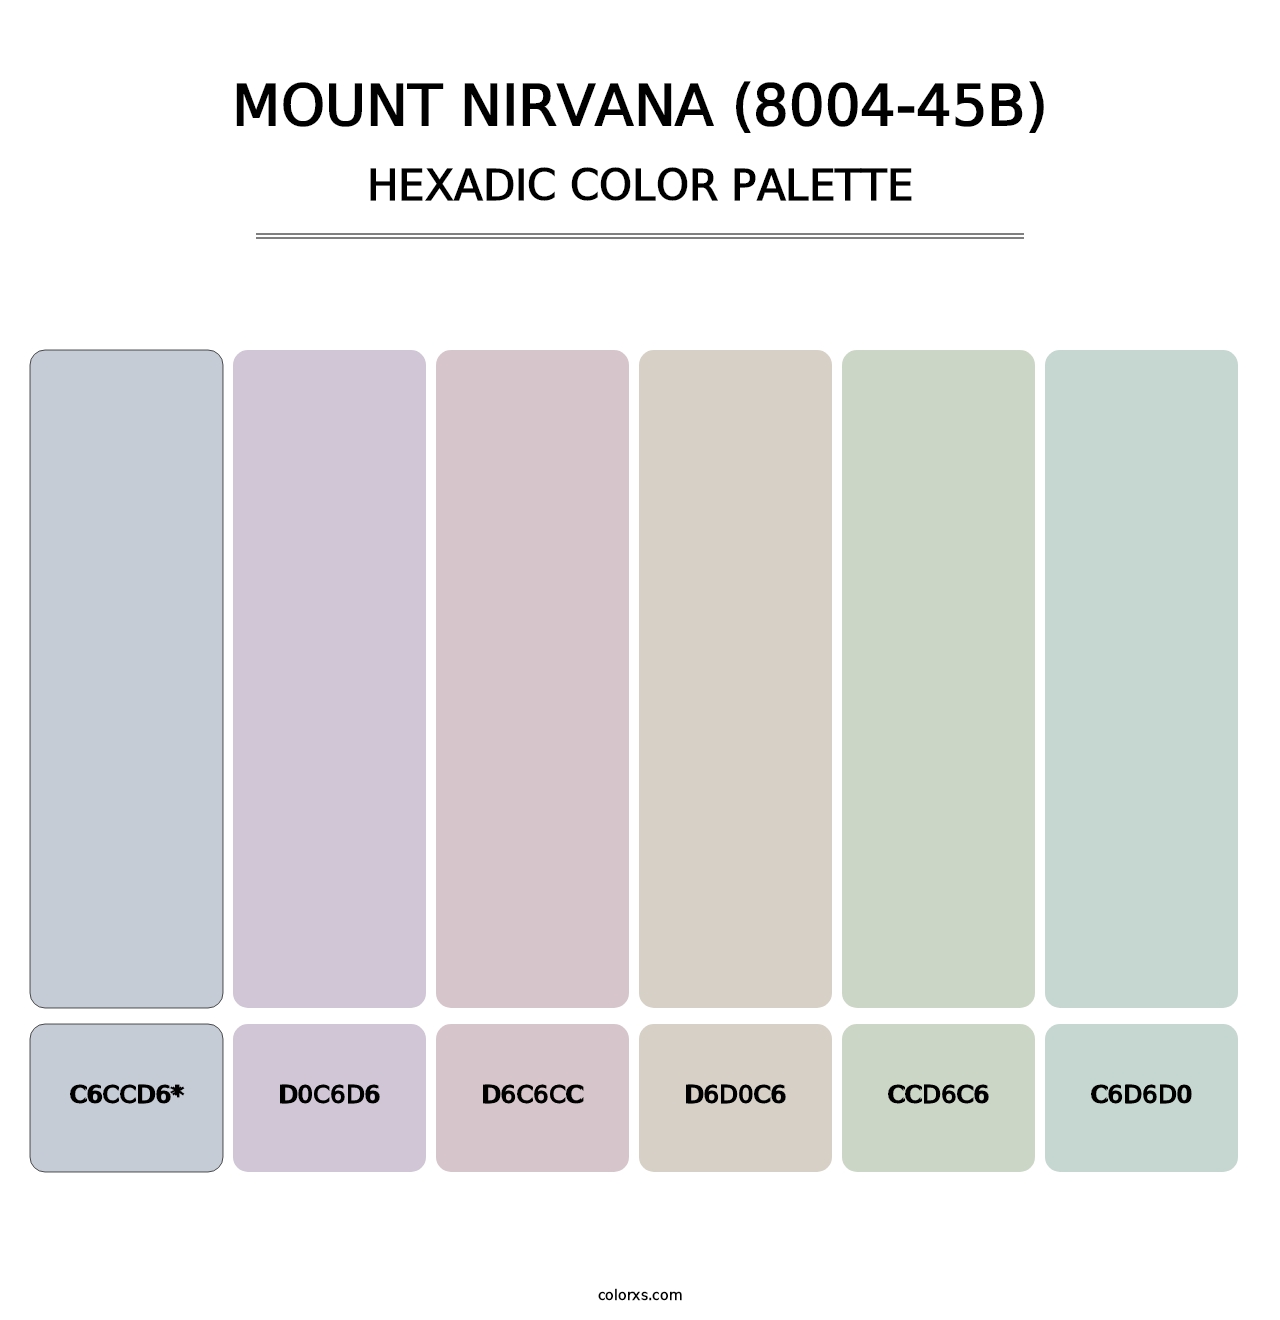 Mount Nirvana (8004-45B) - Hexadic Color Palette